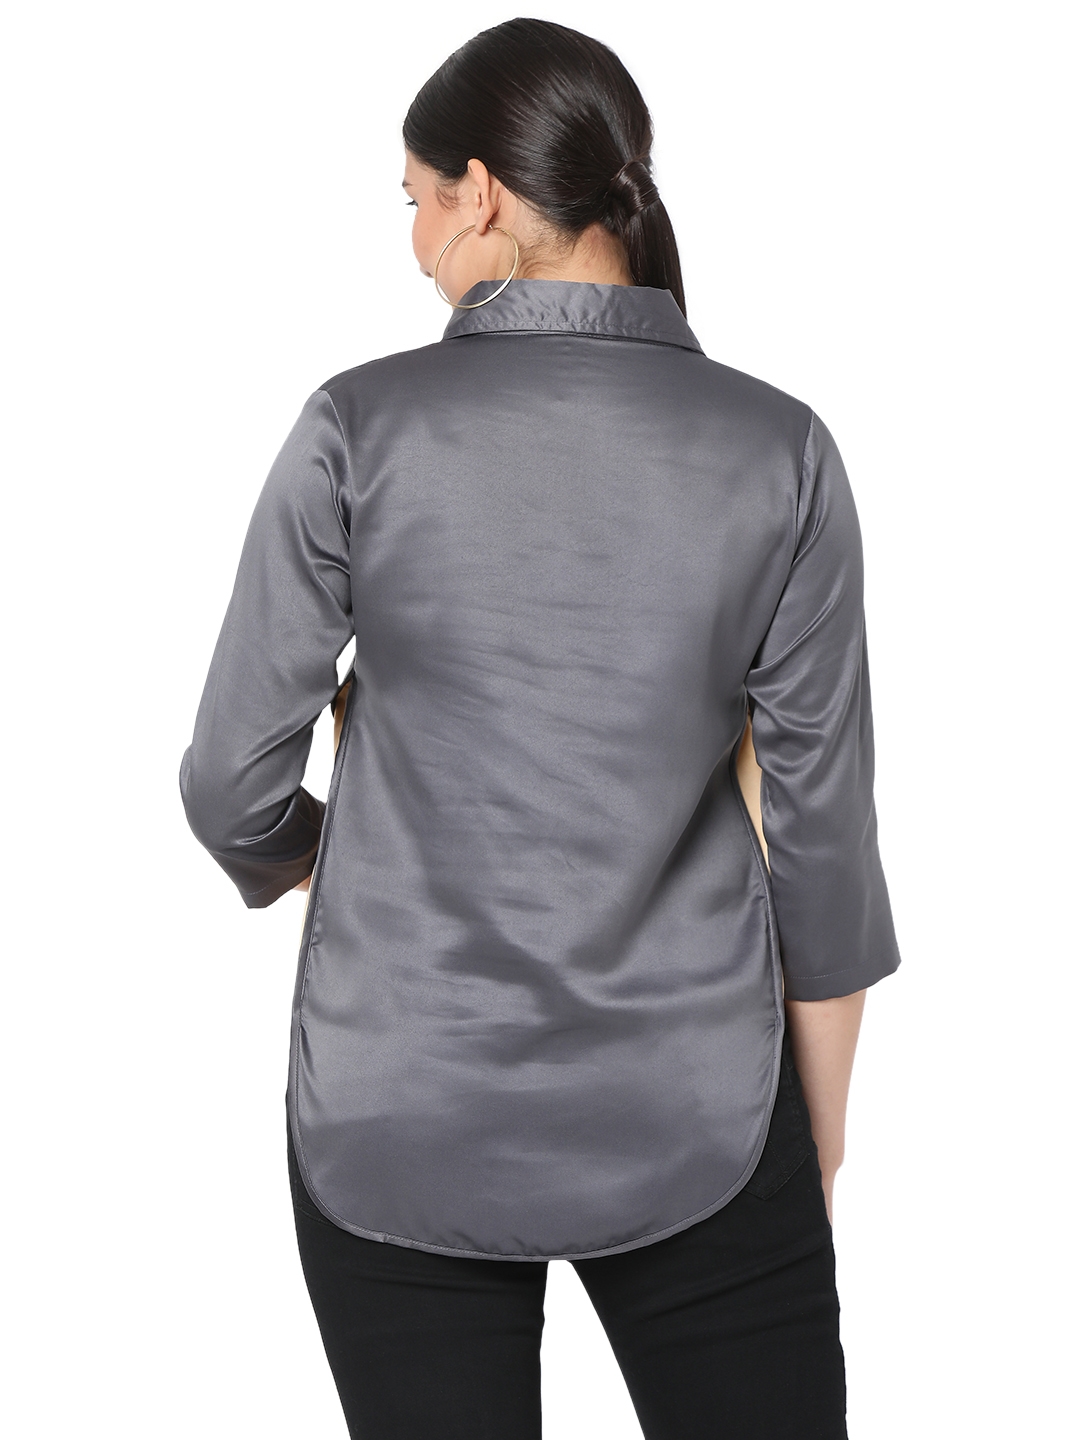 Smarty Pants | Smarty Pants women's silk satin grey color apple cut formal shirt. 3